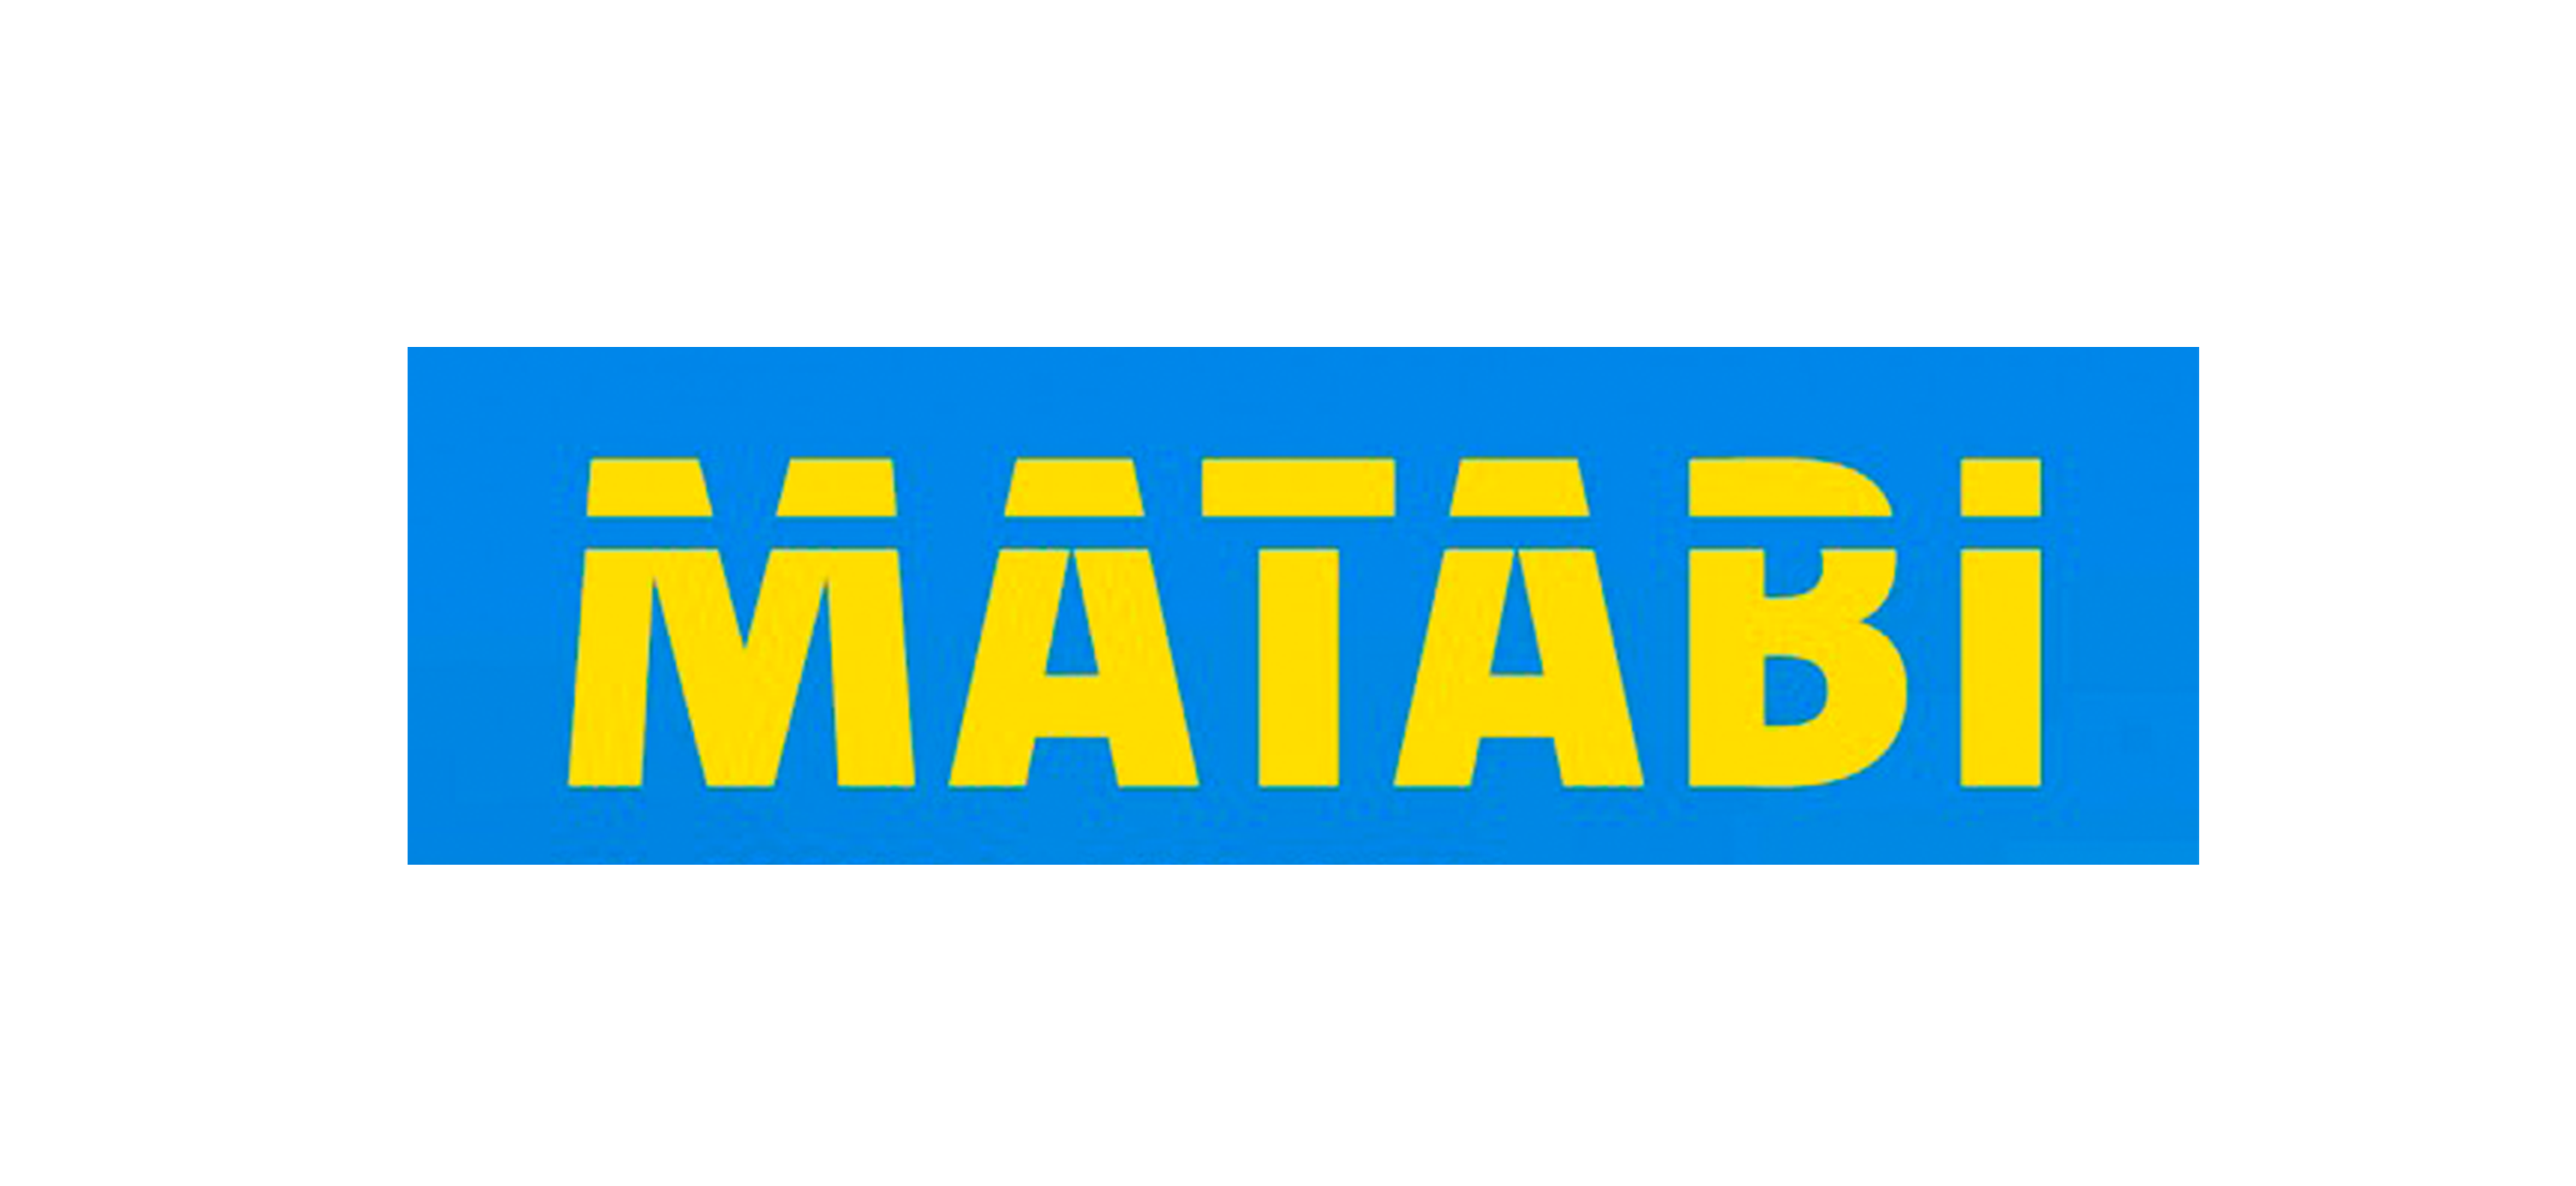 Matabi